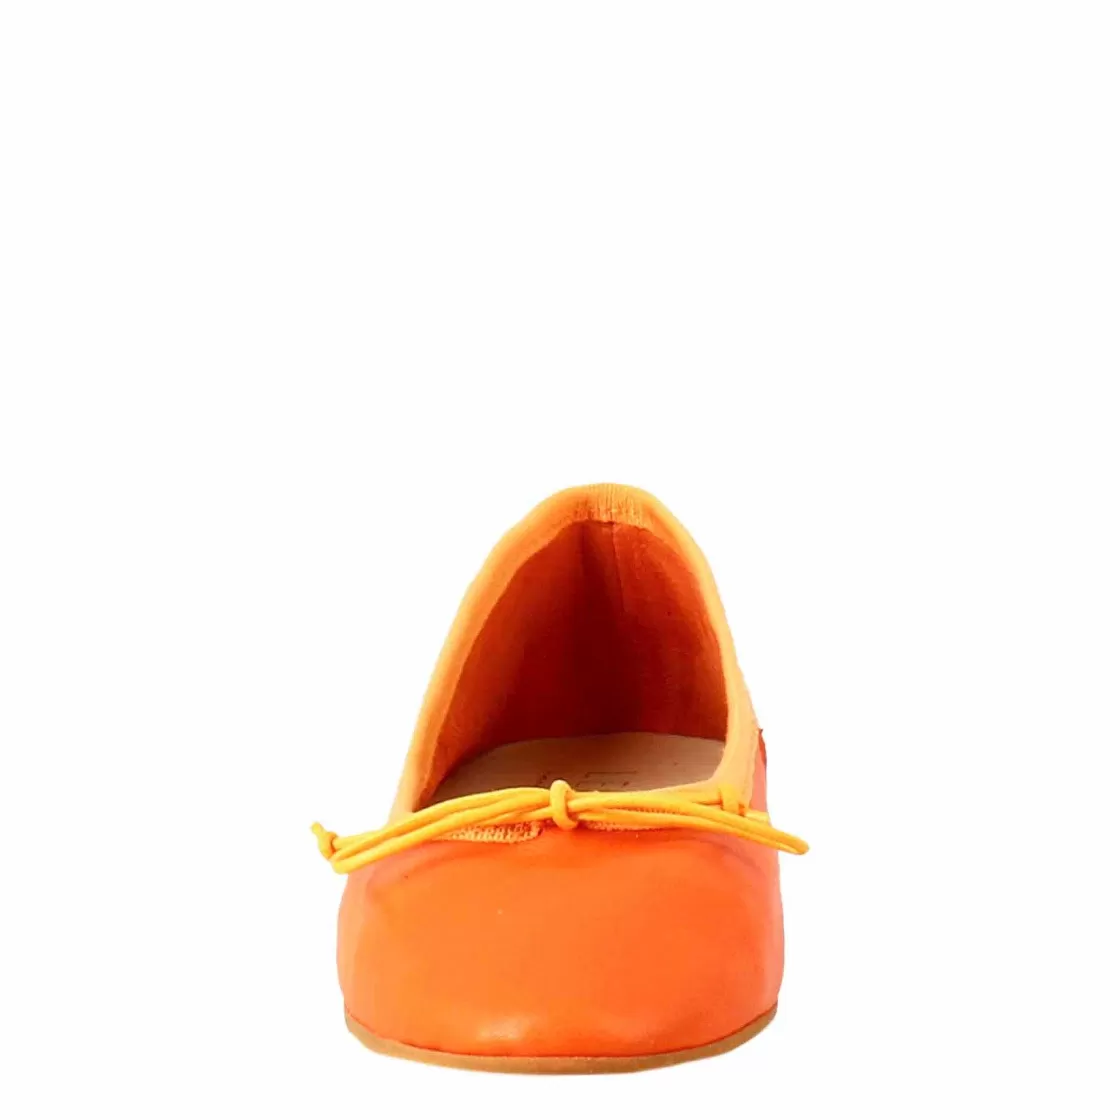 Leonardo Light Women'S Orange Flats Shoes In Smooth Leather Sale